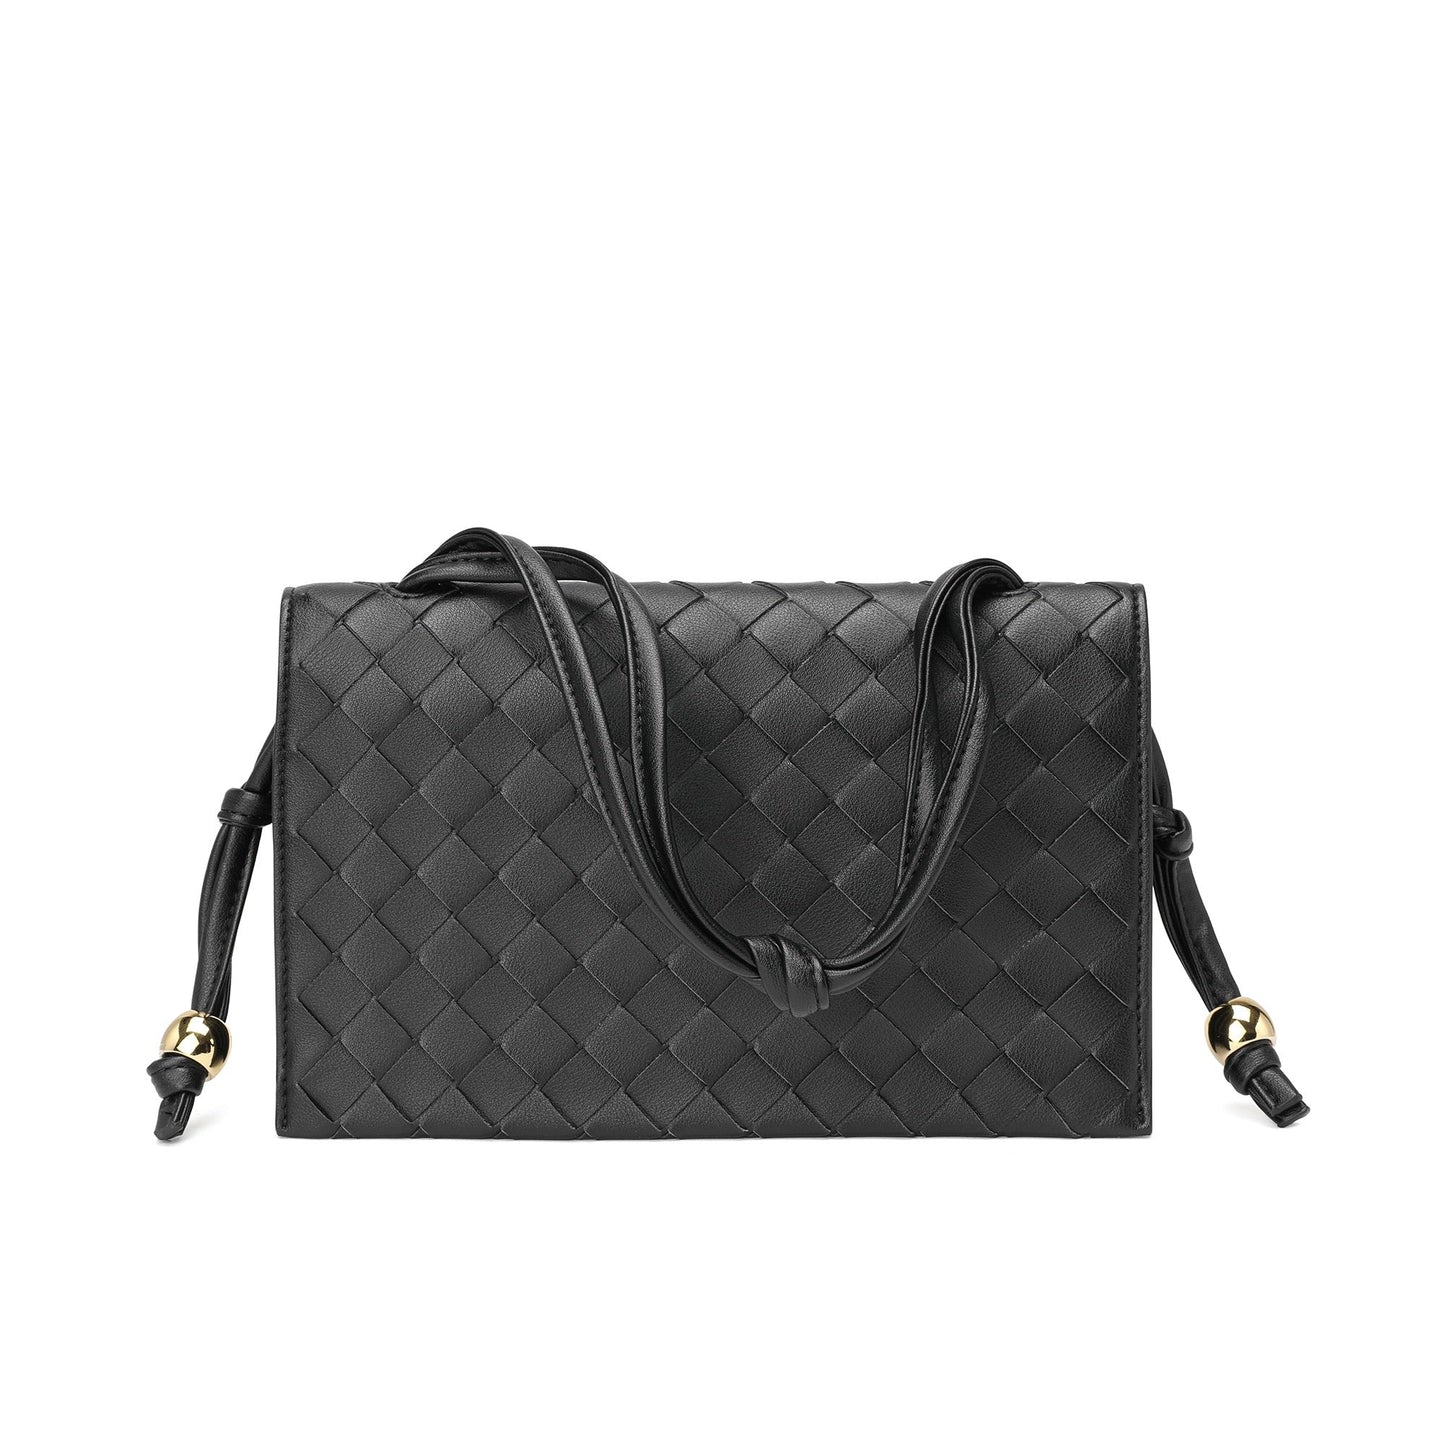 Woven Leather Shoulder Bag/ Clutch